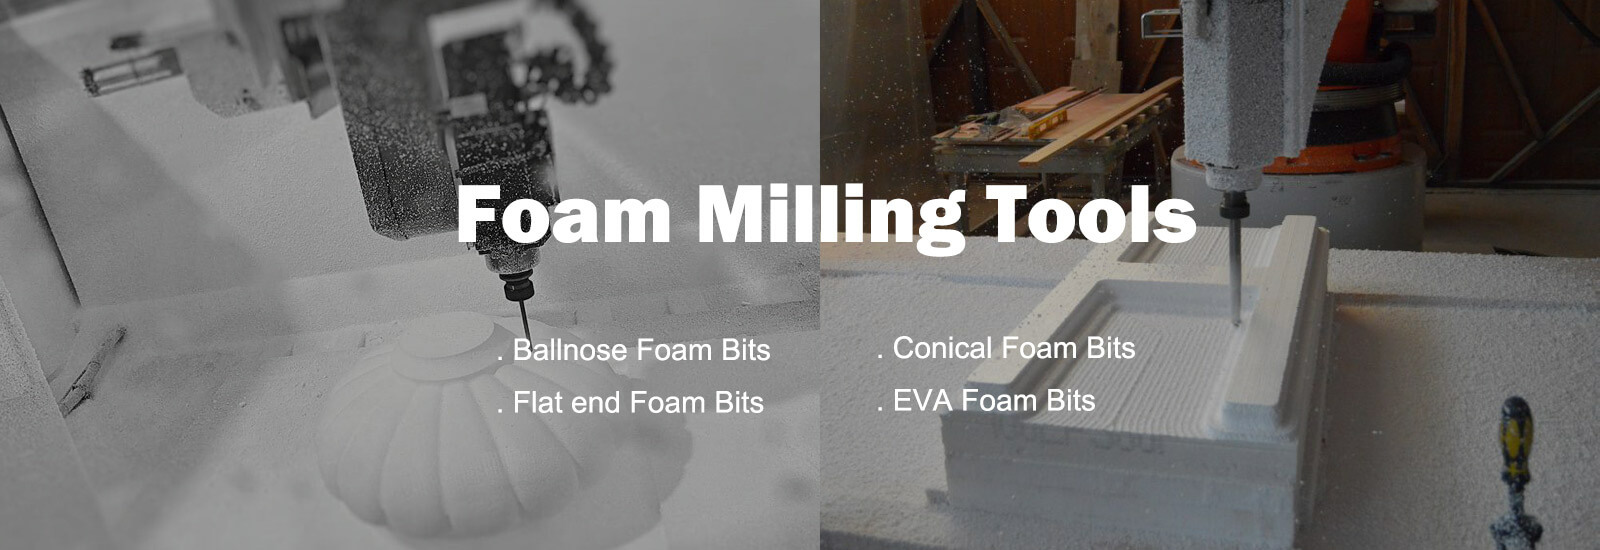 cnc foam milling tools